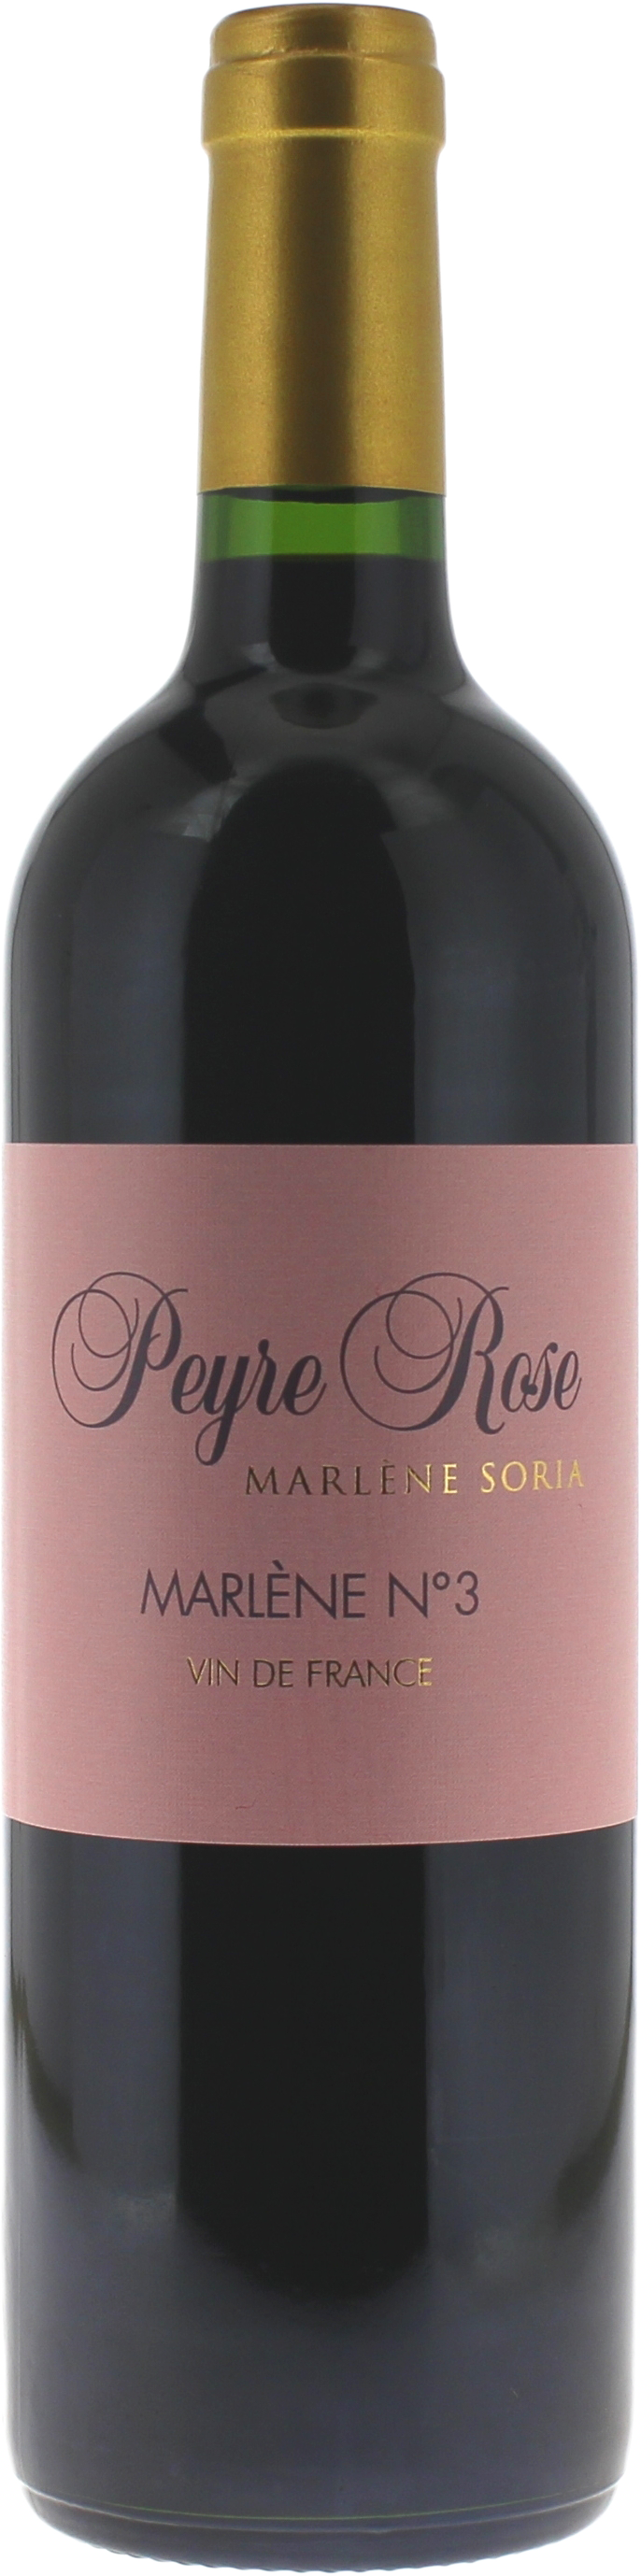 Peyre Rose Marlene N°3 2006